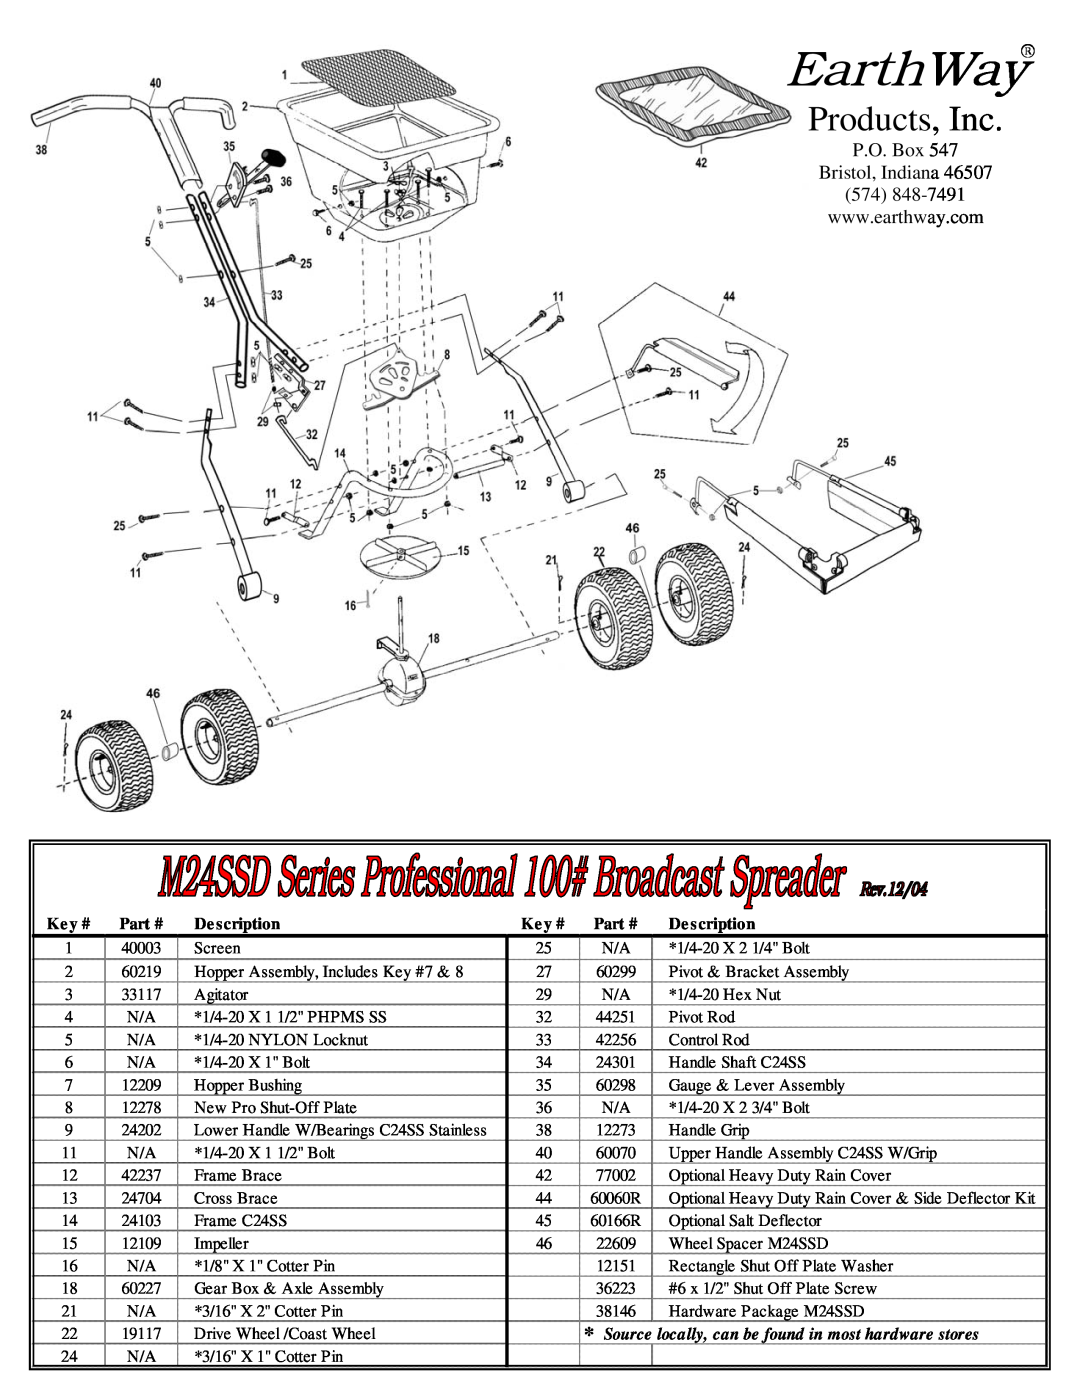 Hitachi M24SSD manual Key #, Description, EarthWay, Products, Inc 